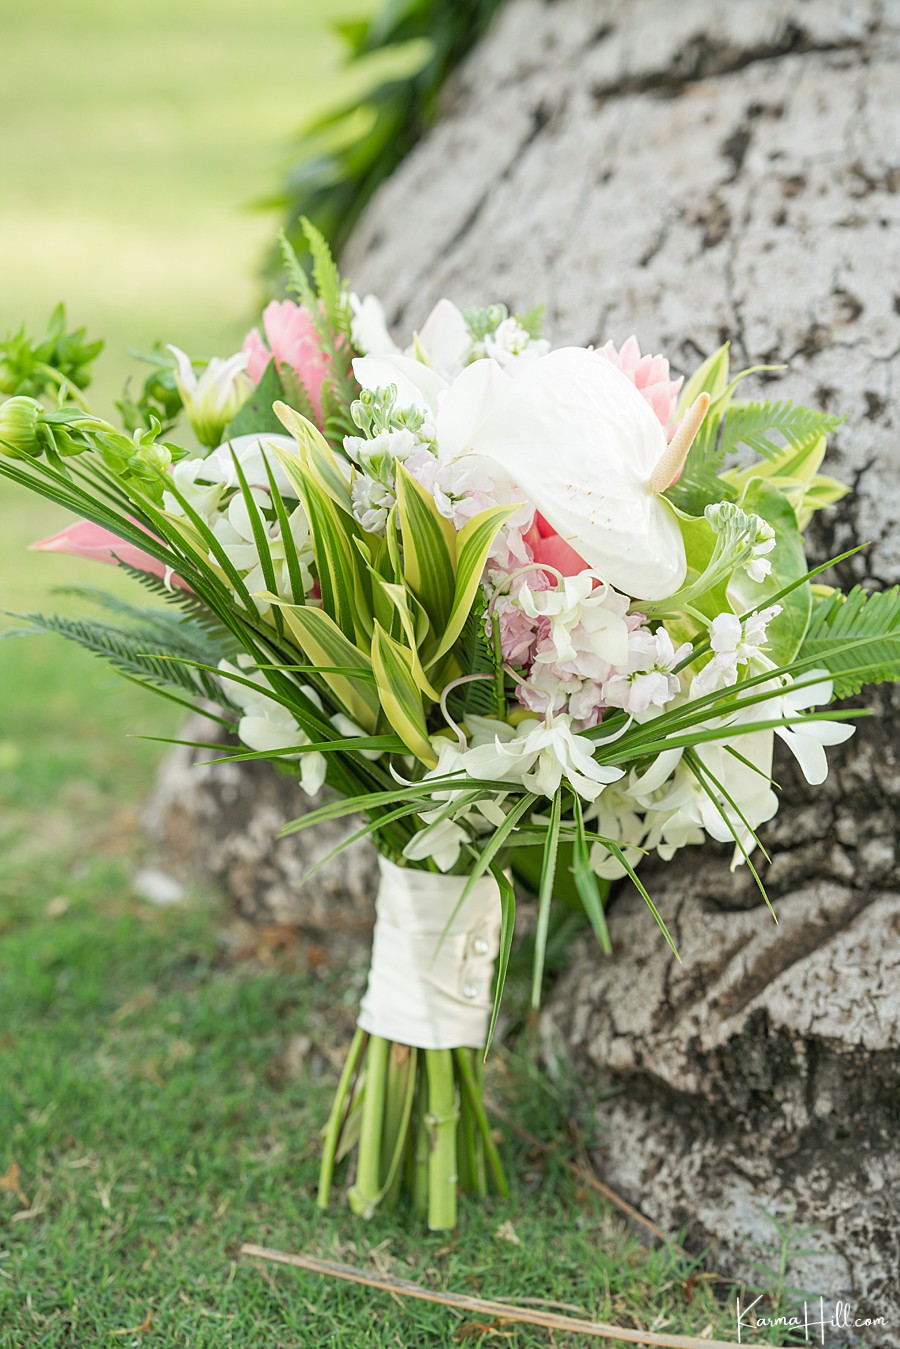 Maui wedding bouquet